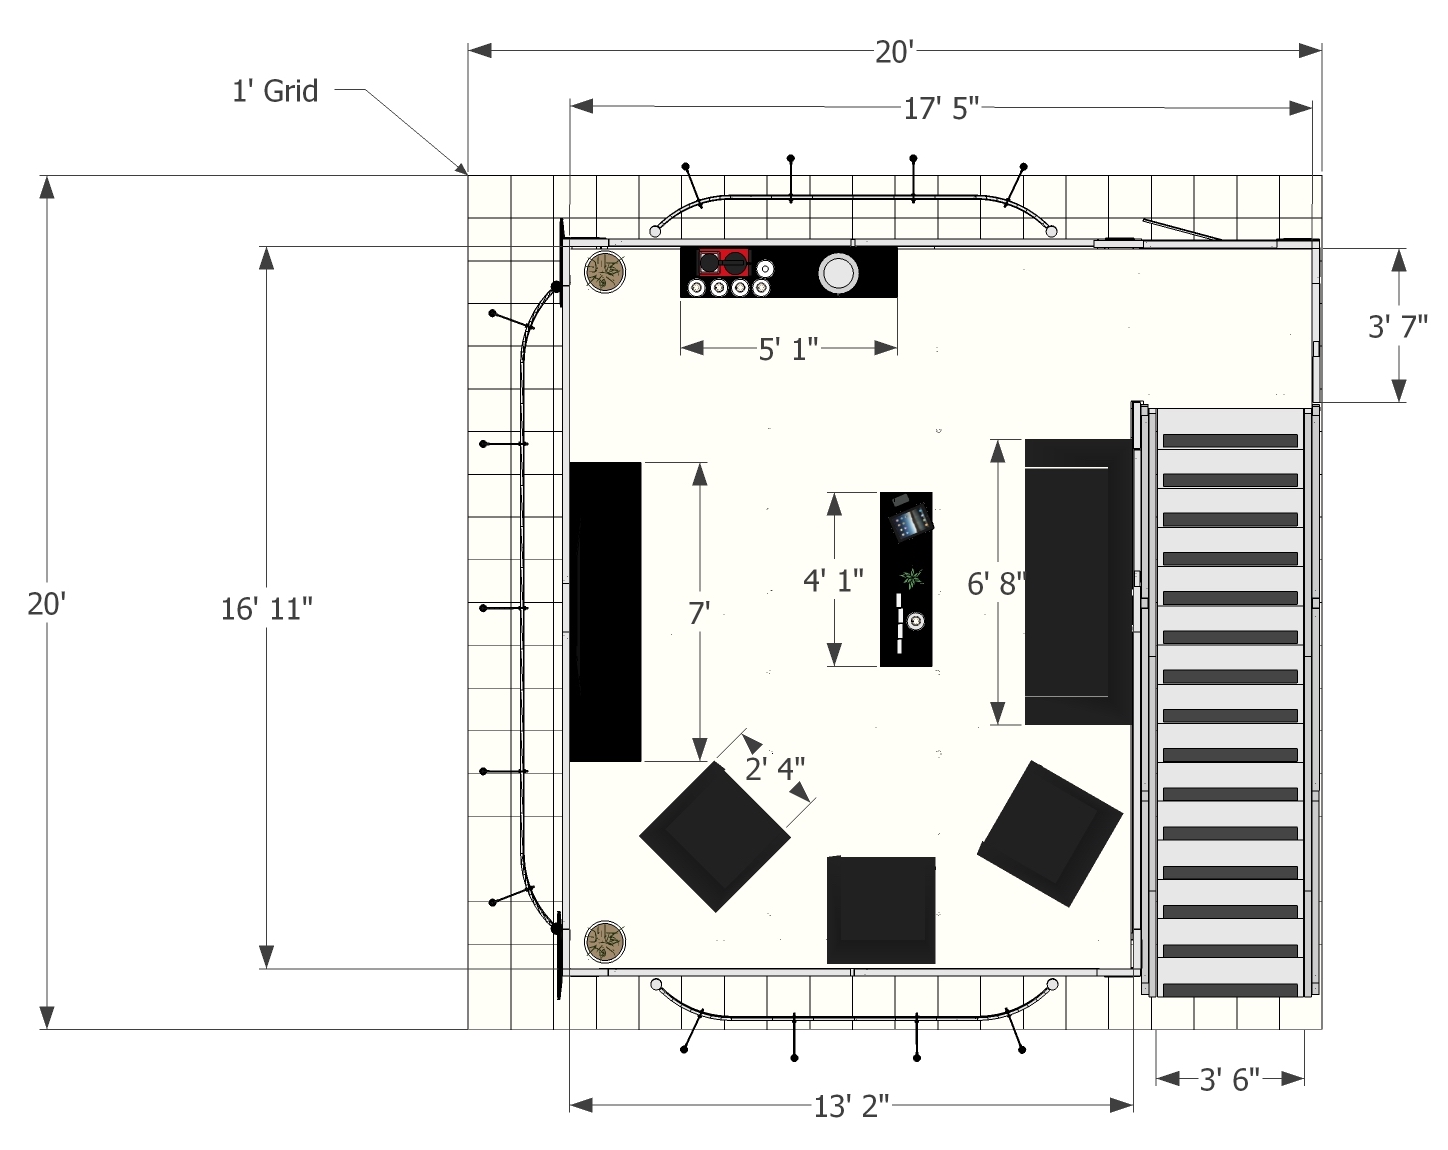 Floor plan for A2020 Multi-level trade show Exhibit Design A